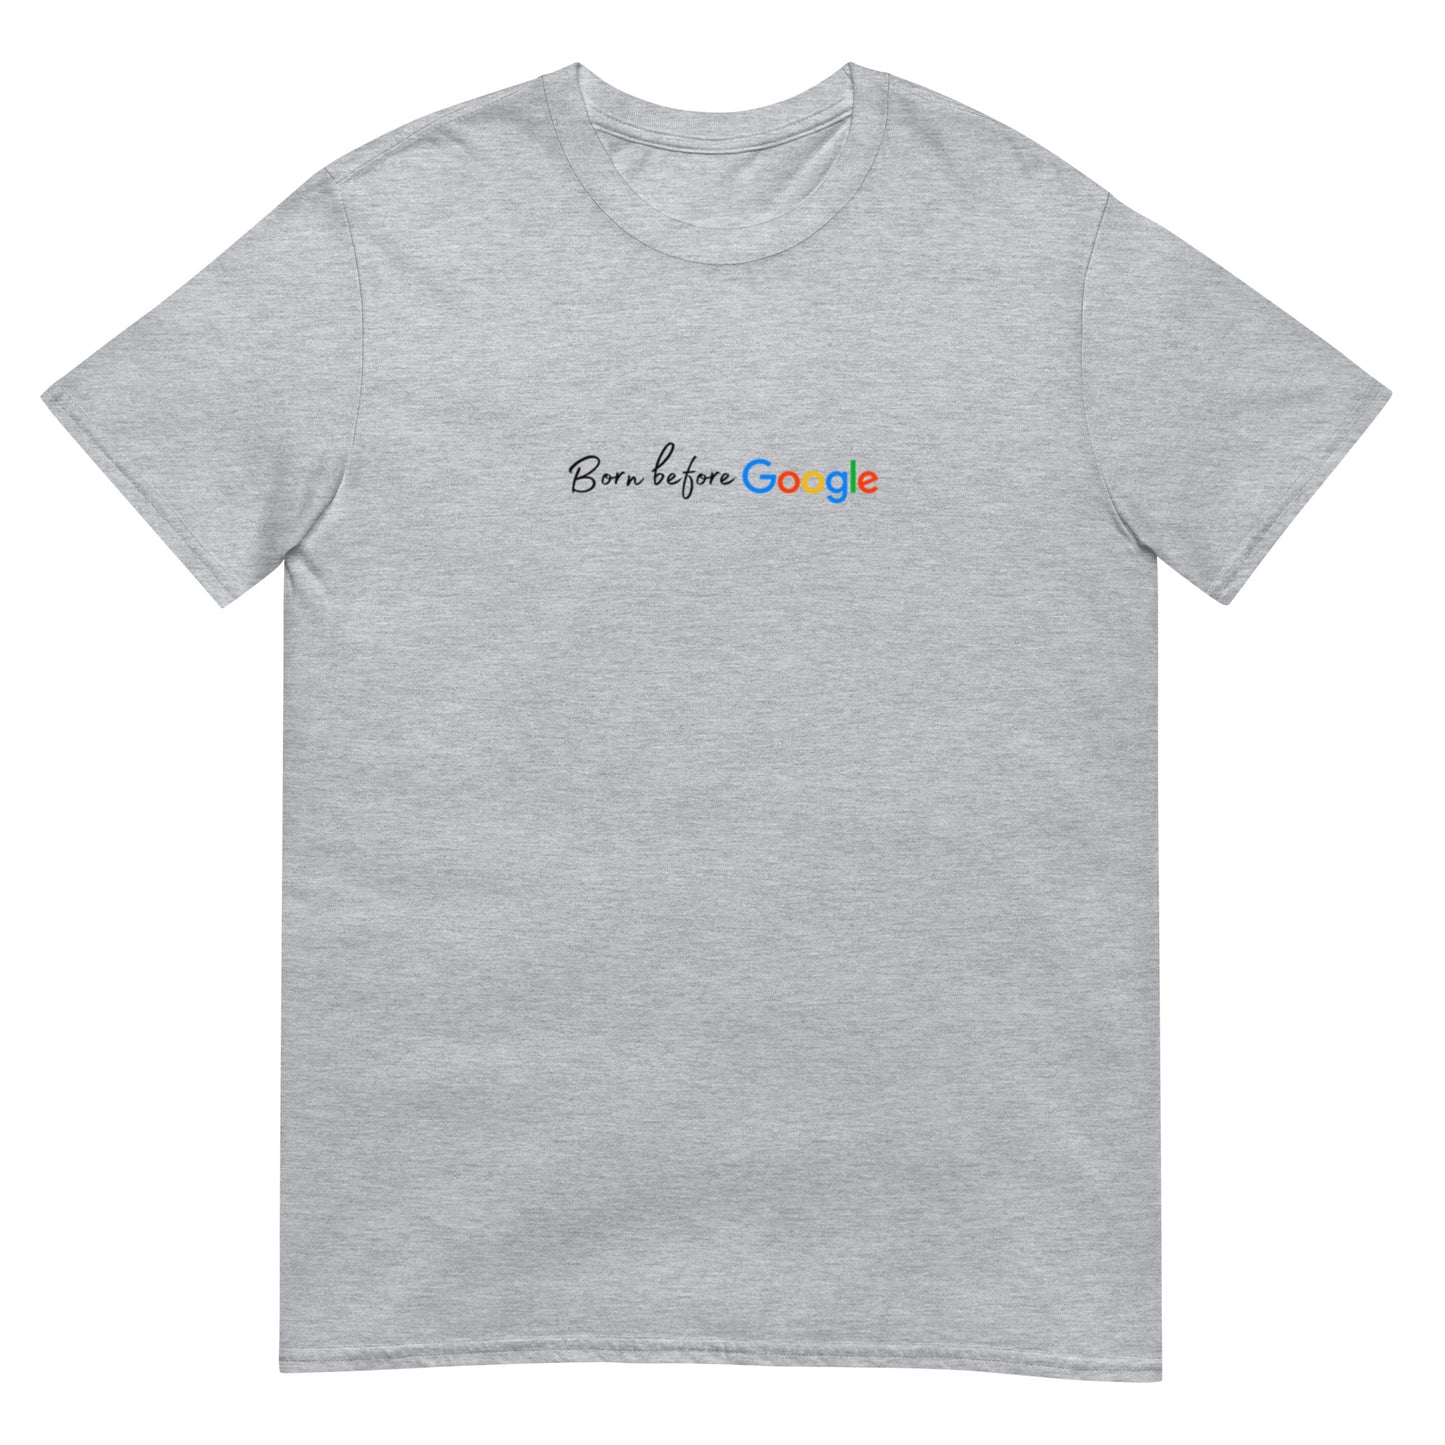 Born before Google Unisex T-Shirt